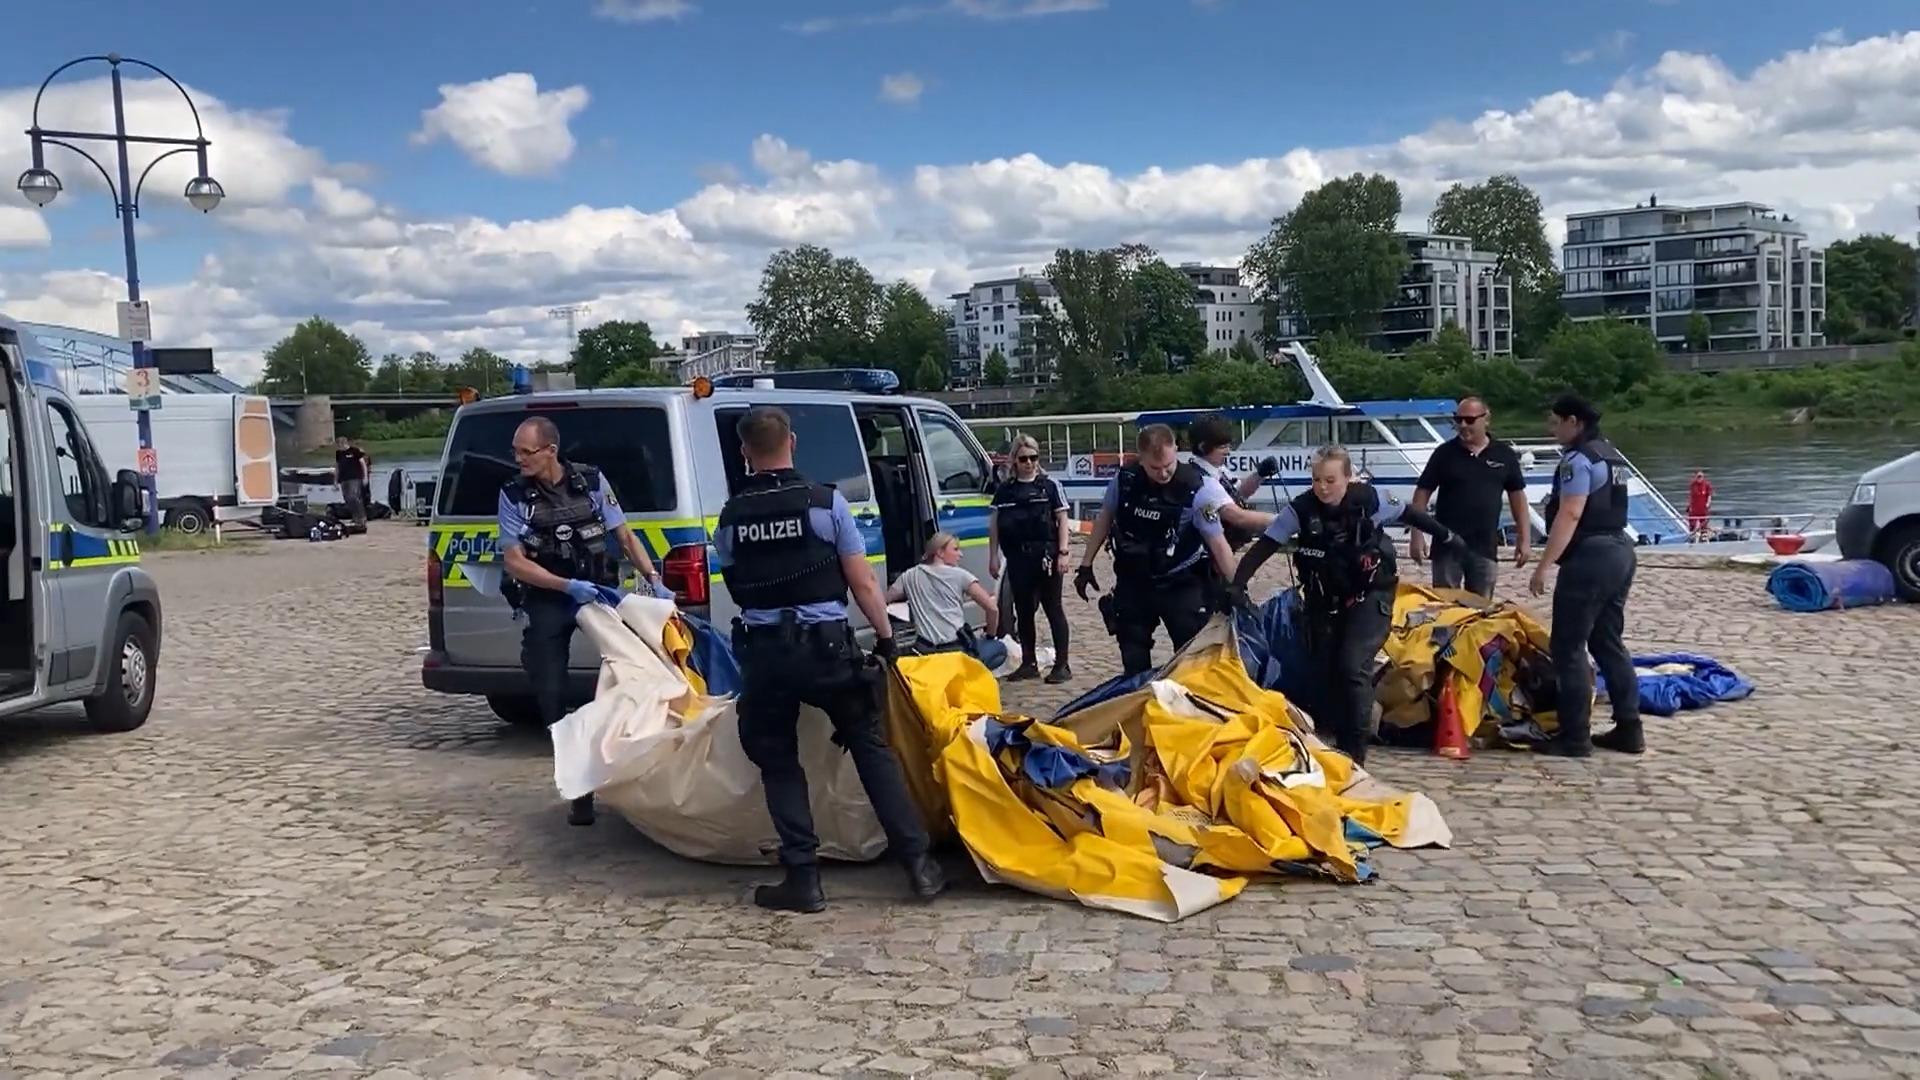 Neun Verletzte bei großem Hüpfburgunfall in Magdeburg